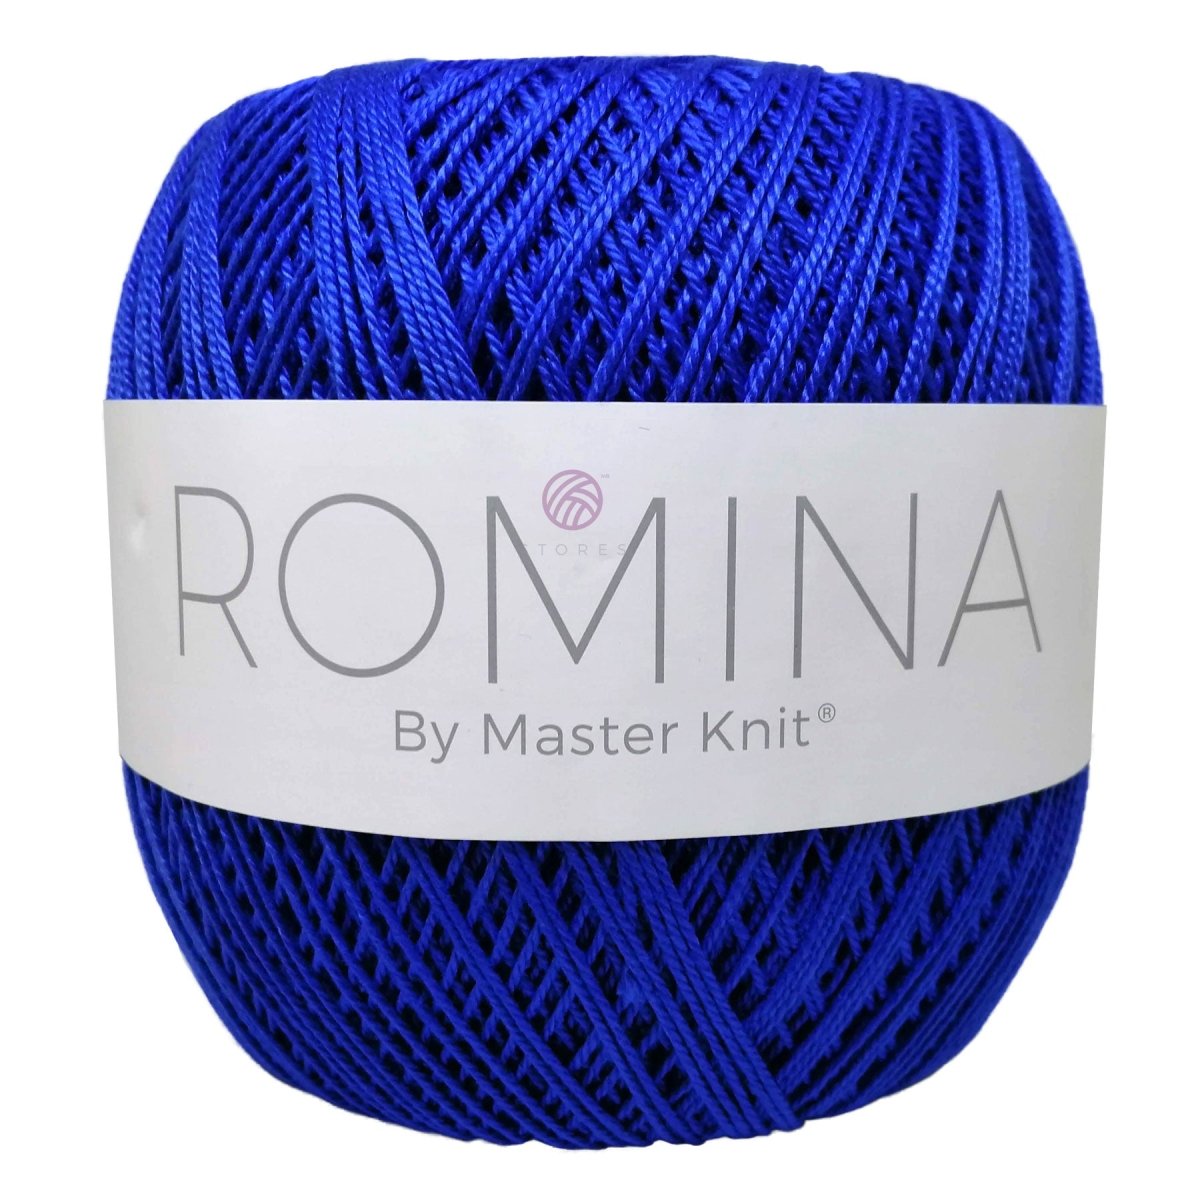 ROMINA - Crochetstores9335-029745051438425